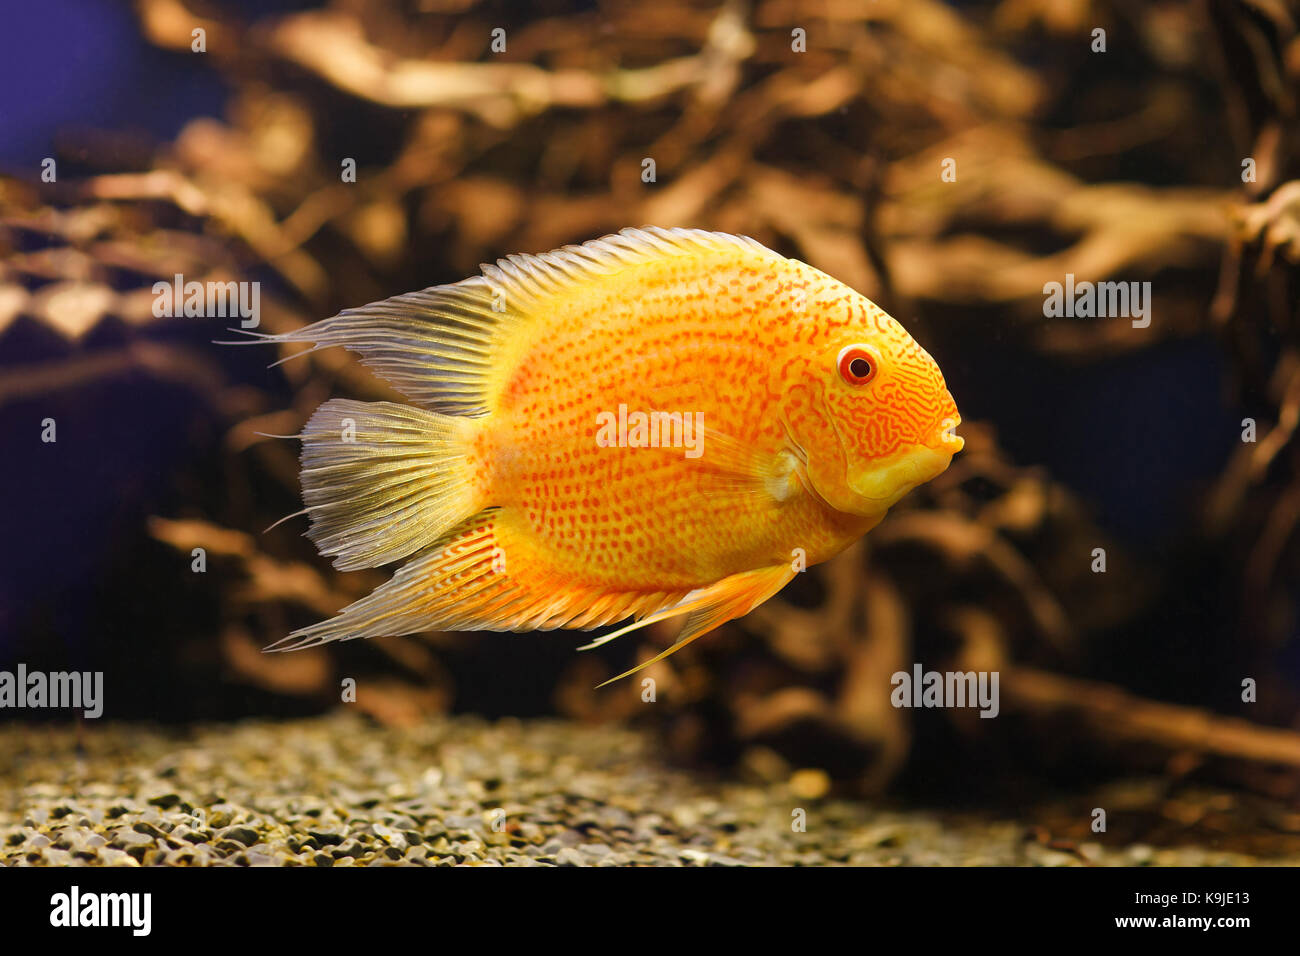 Red albinos Cichlid. Latin name - Cichlasoma severum swimming underwater in fresh aquarium. High resolution photo. Stock Photo